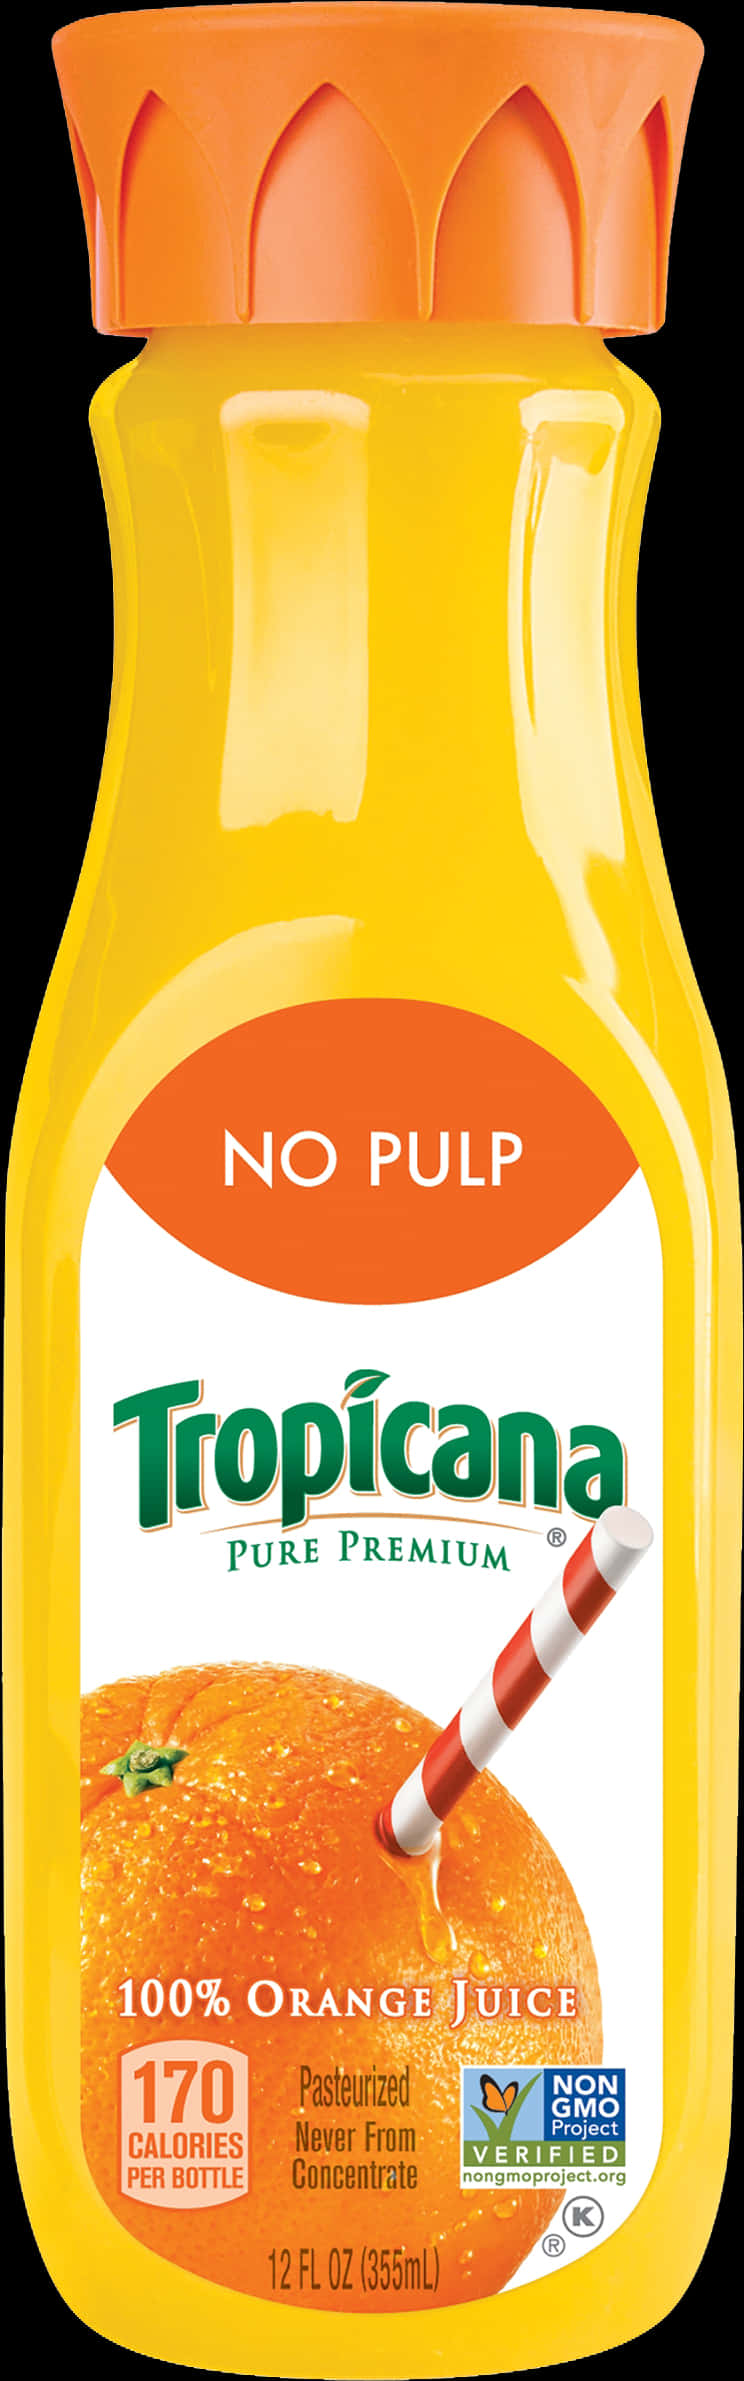 Tropicana No Pulp Orange Juice Bottle